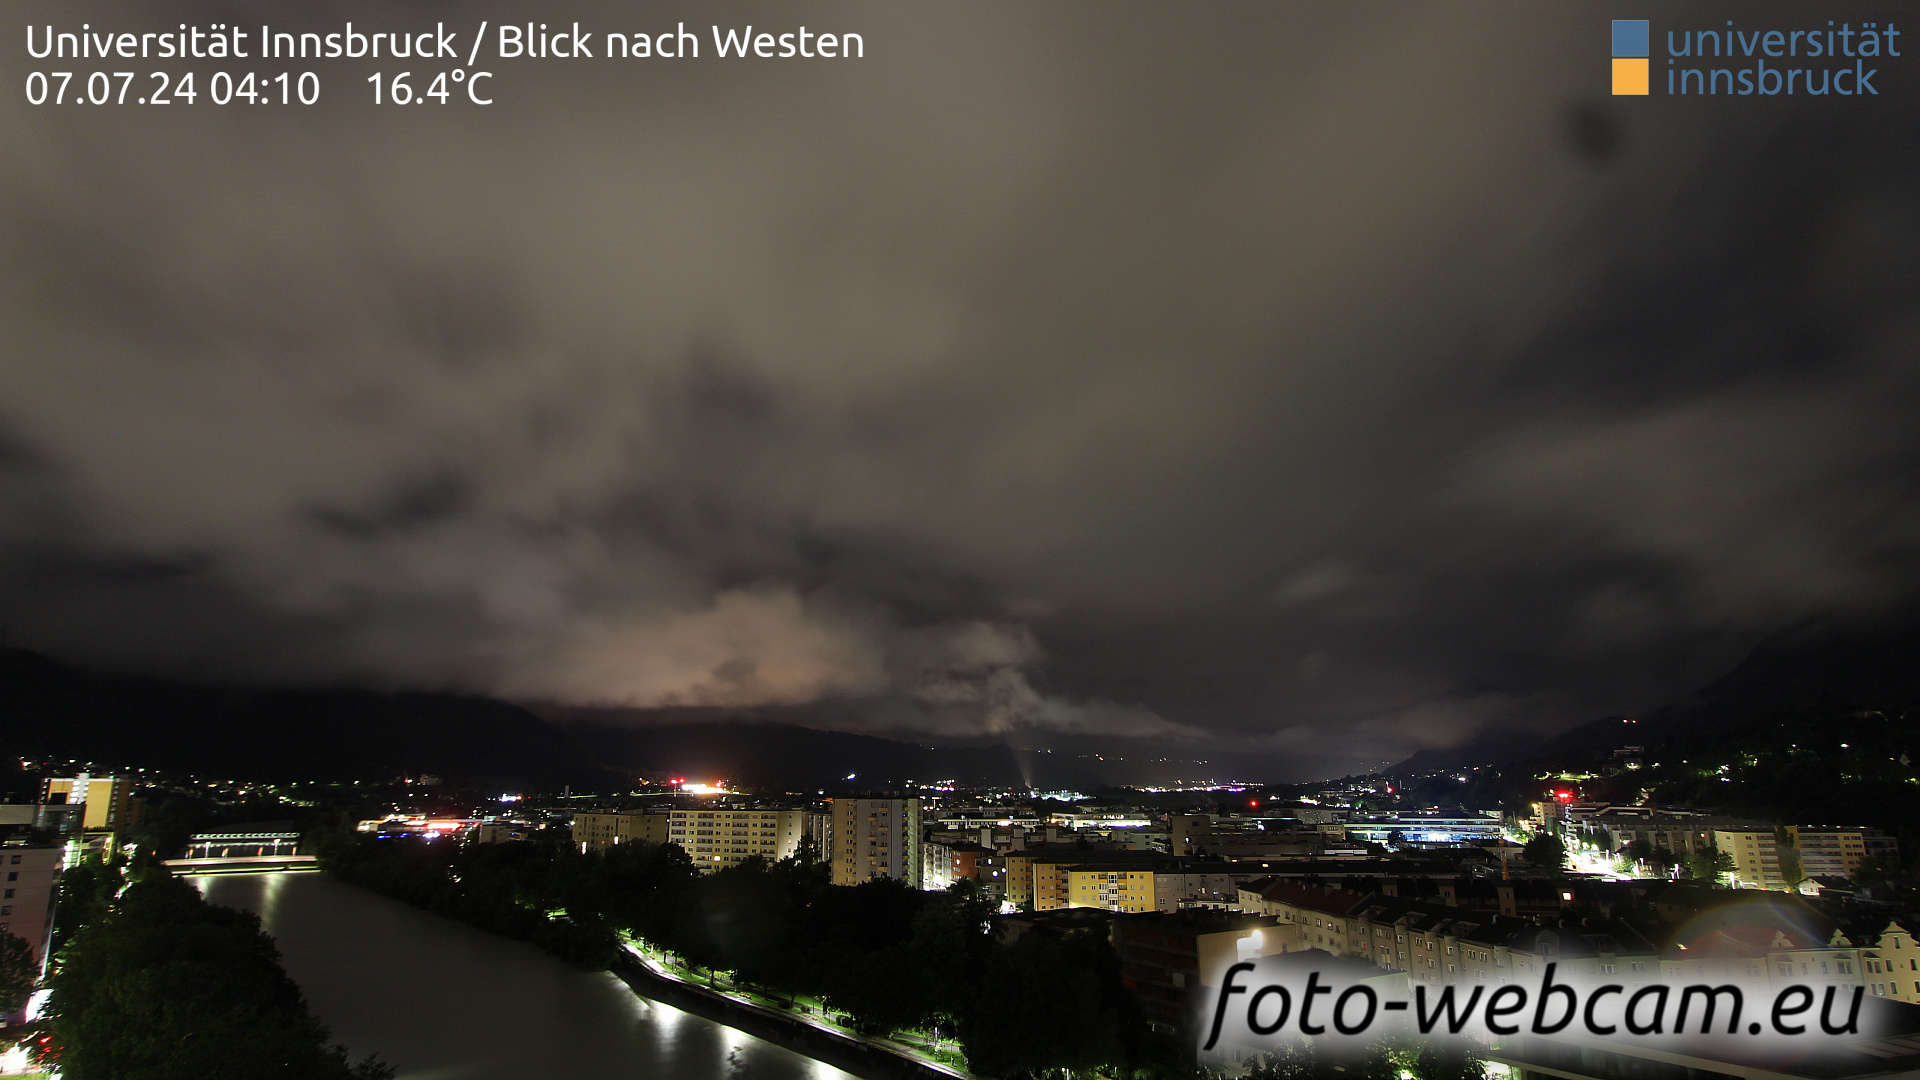 Innsbruck Fr. 04:17